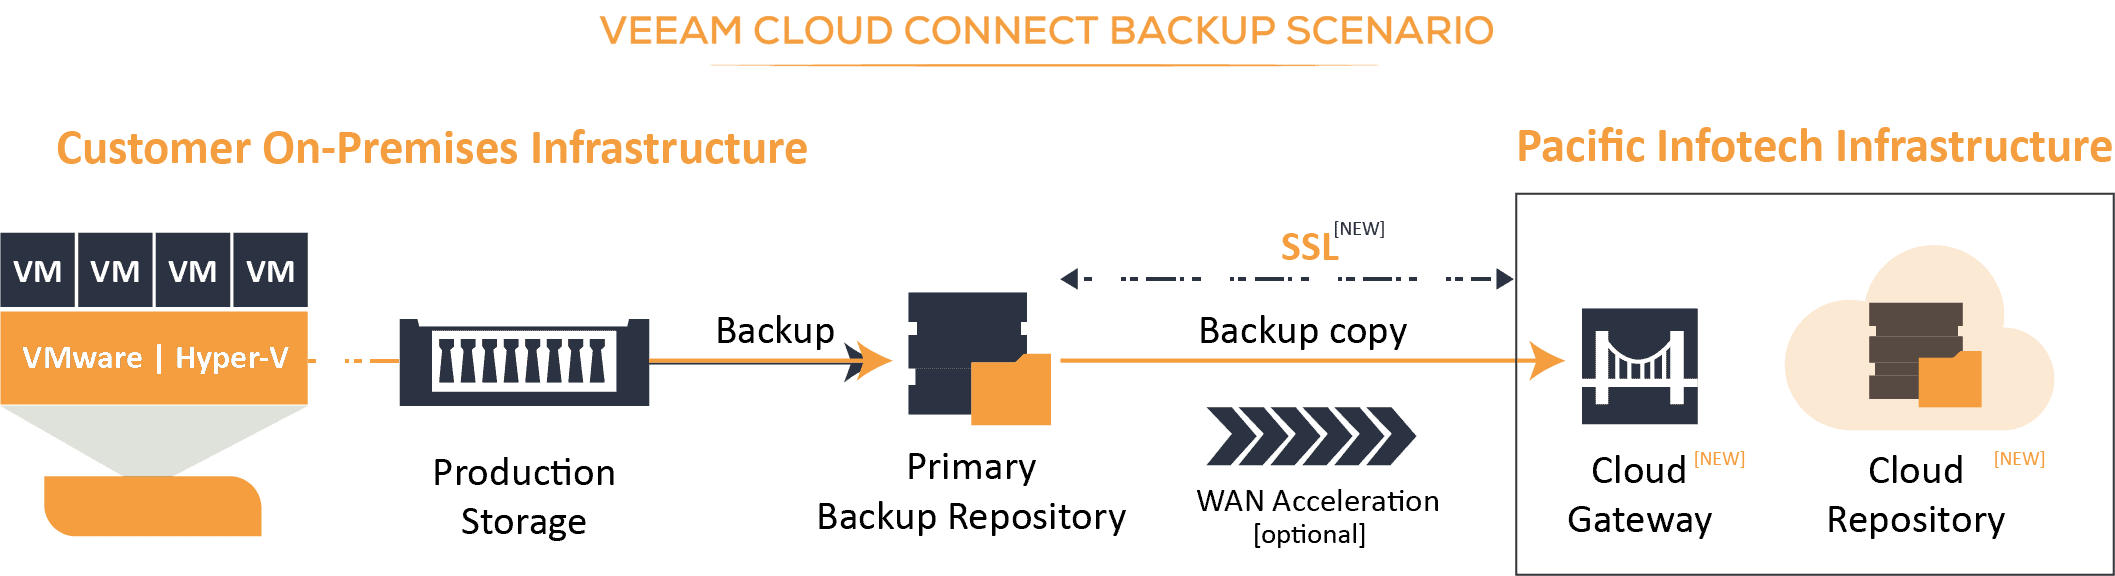 Veeam-Cloud-Connect-Backup